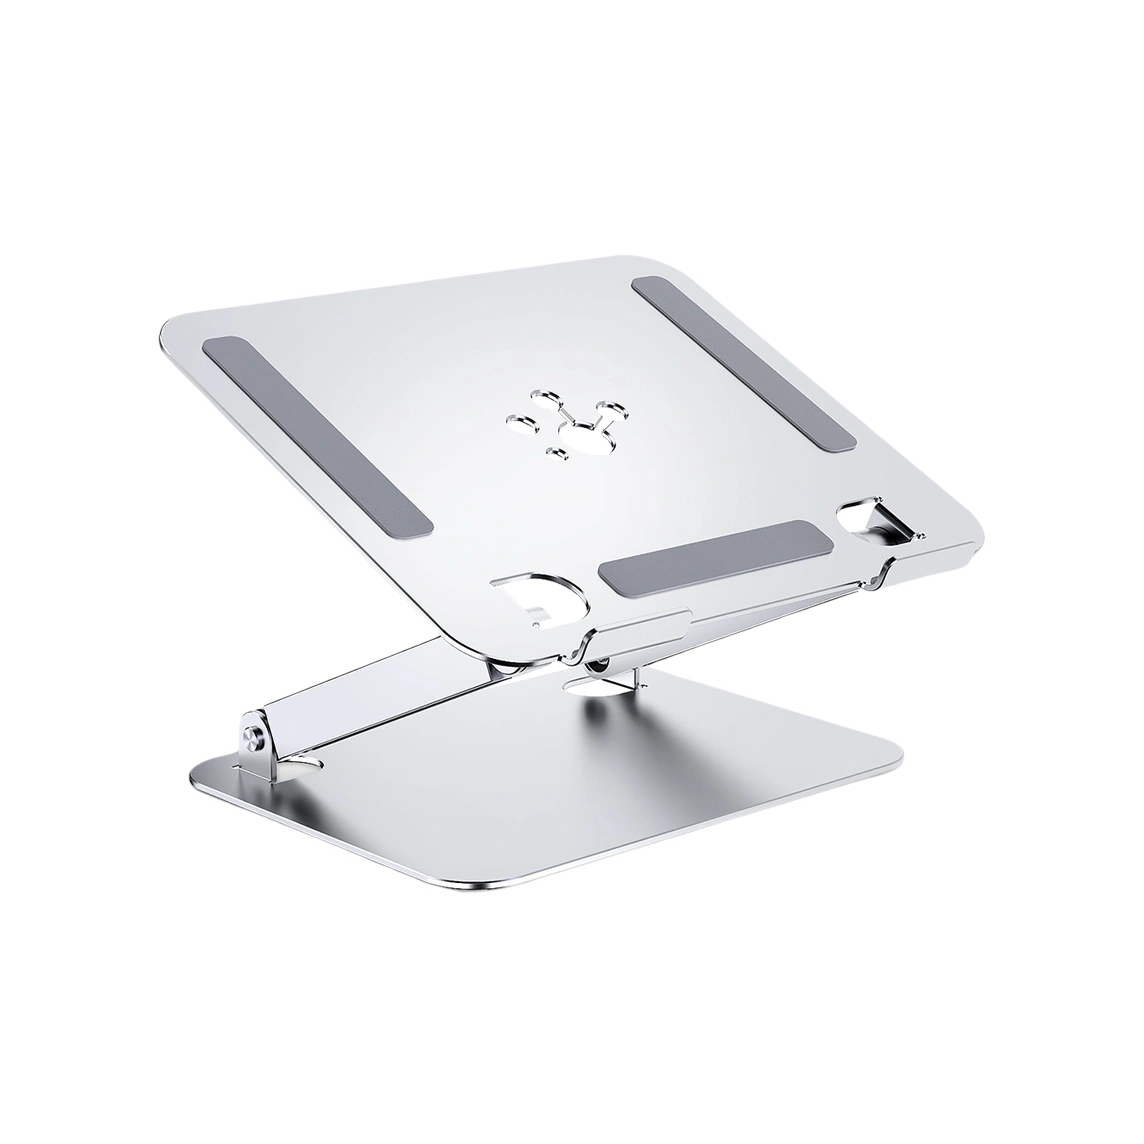 Lention Adjustable Height Laptop Stand Desk Riser Stand L5B